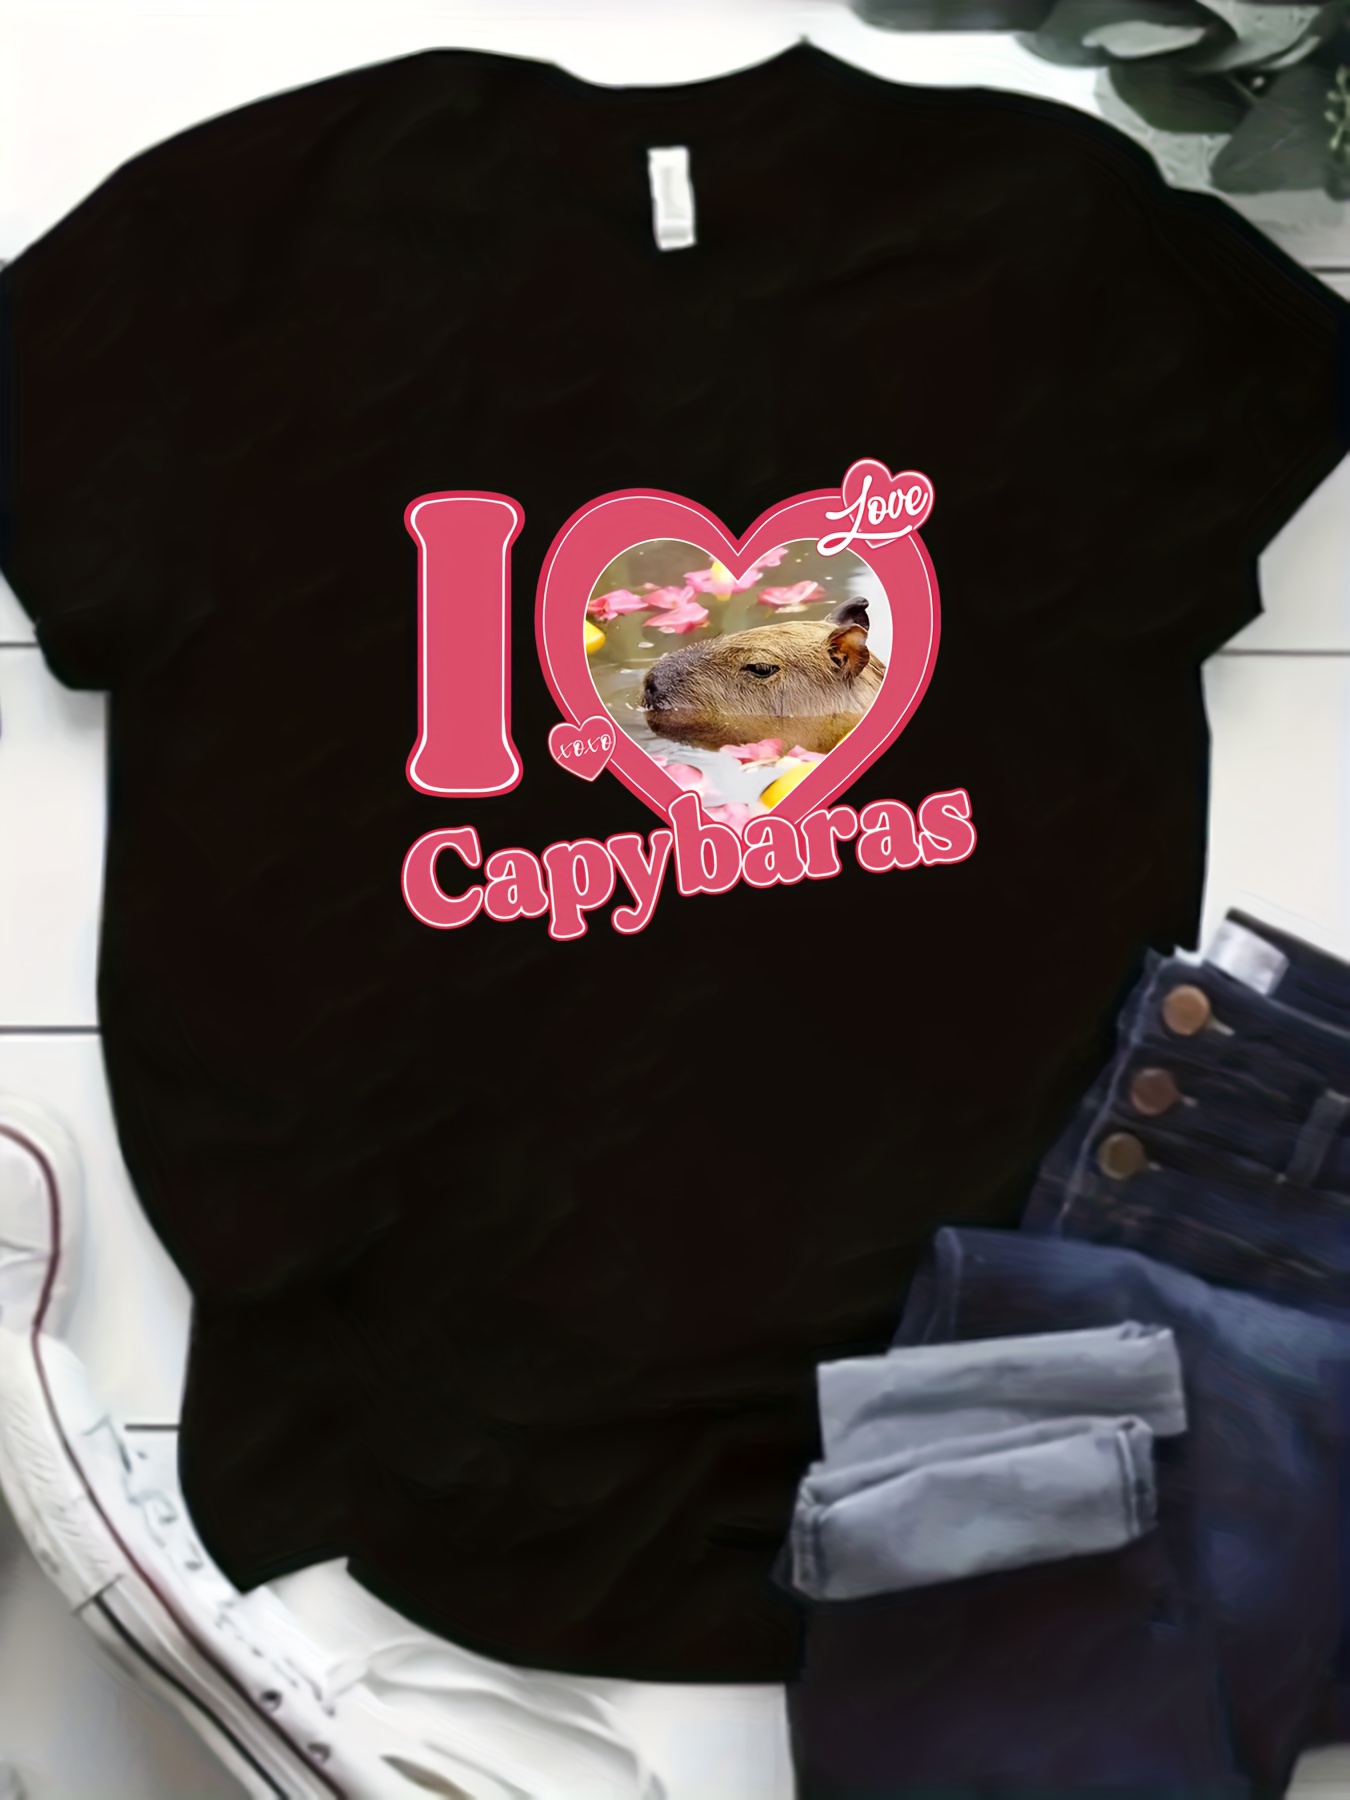 I Love Emo Girls Tshirt / I Heart Emo Girls T Shirt / Y2K -  Australia